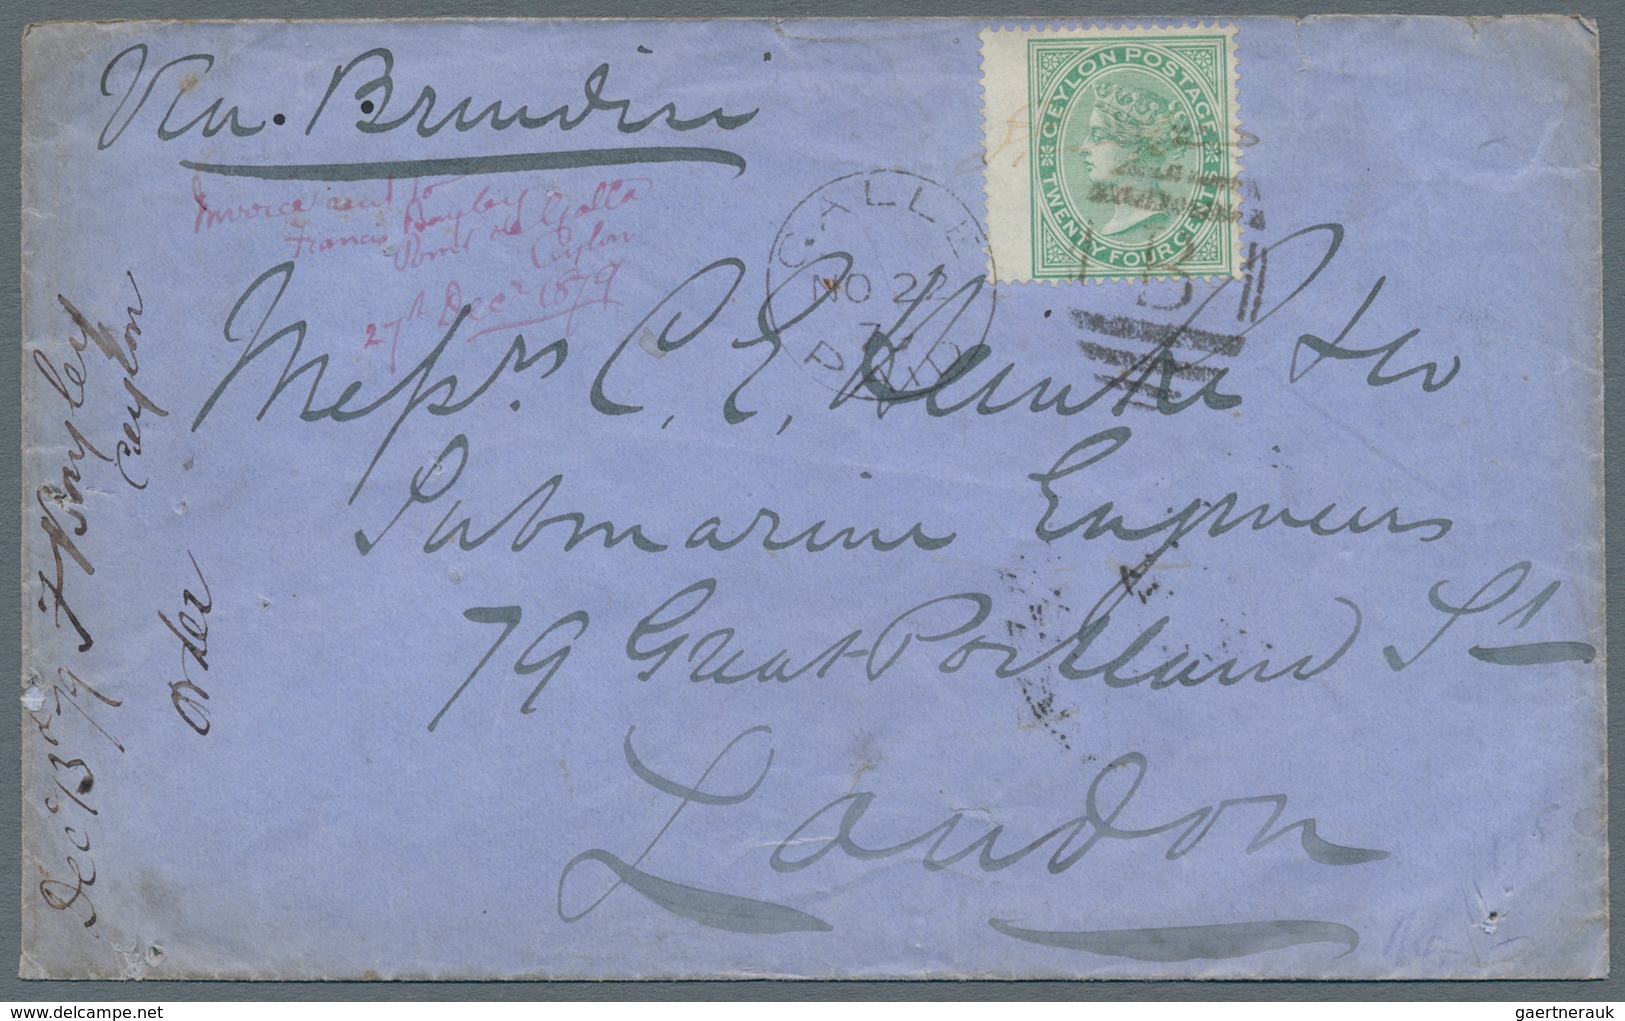 Ceylon / Sri Lanka: 1872 Wing-marginal Single 24c. Green Used On Cover From Galle To London 'Via Bri - Sri Lanka (Ceylon) (1948-...)